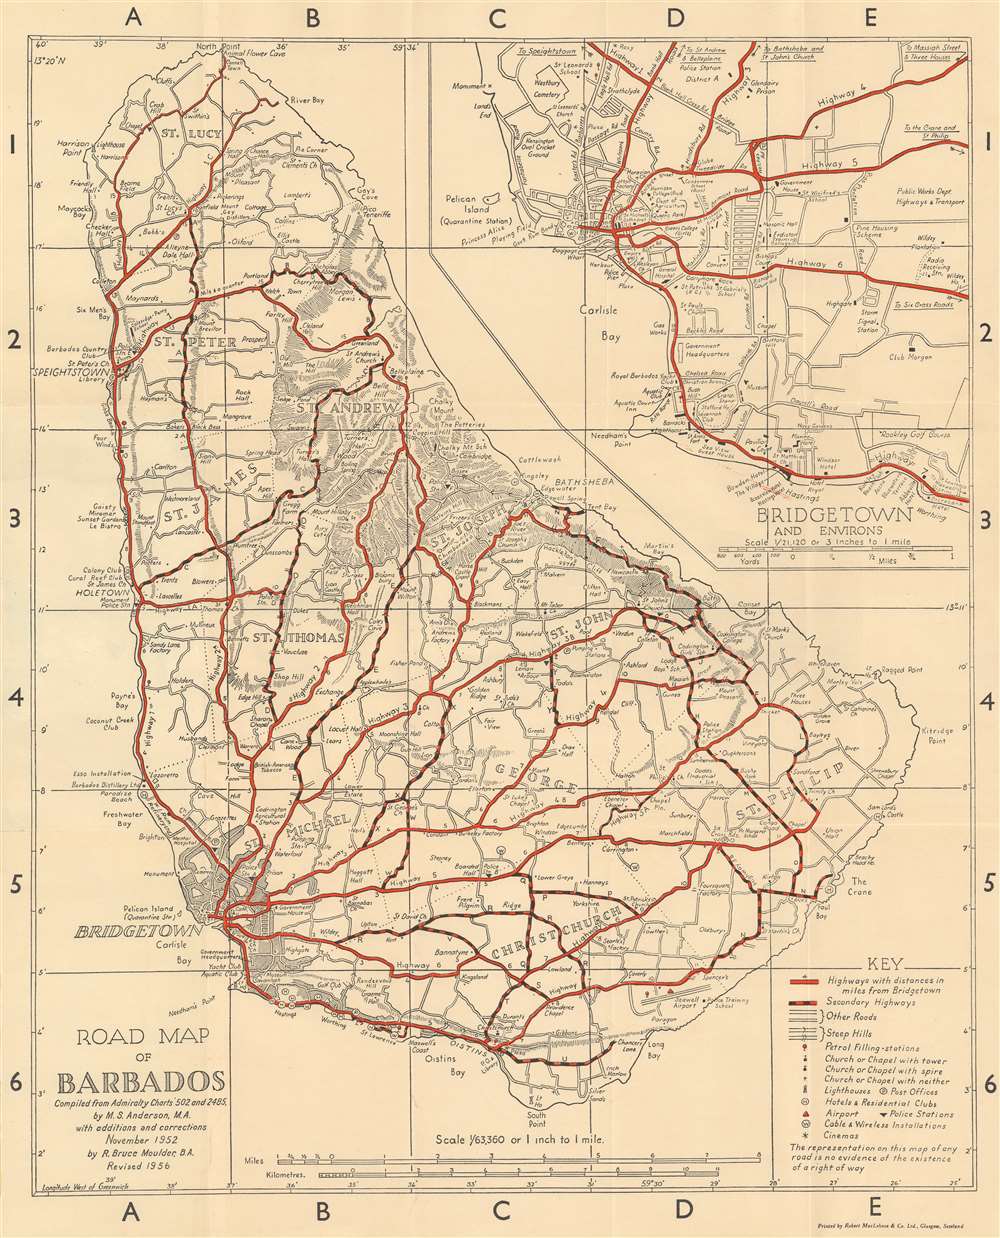 Road Map of Barbados. - Main View